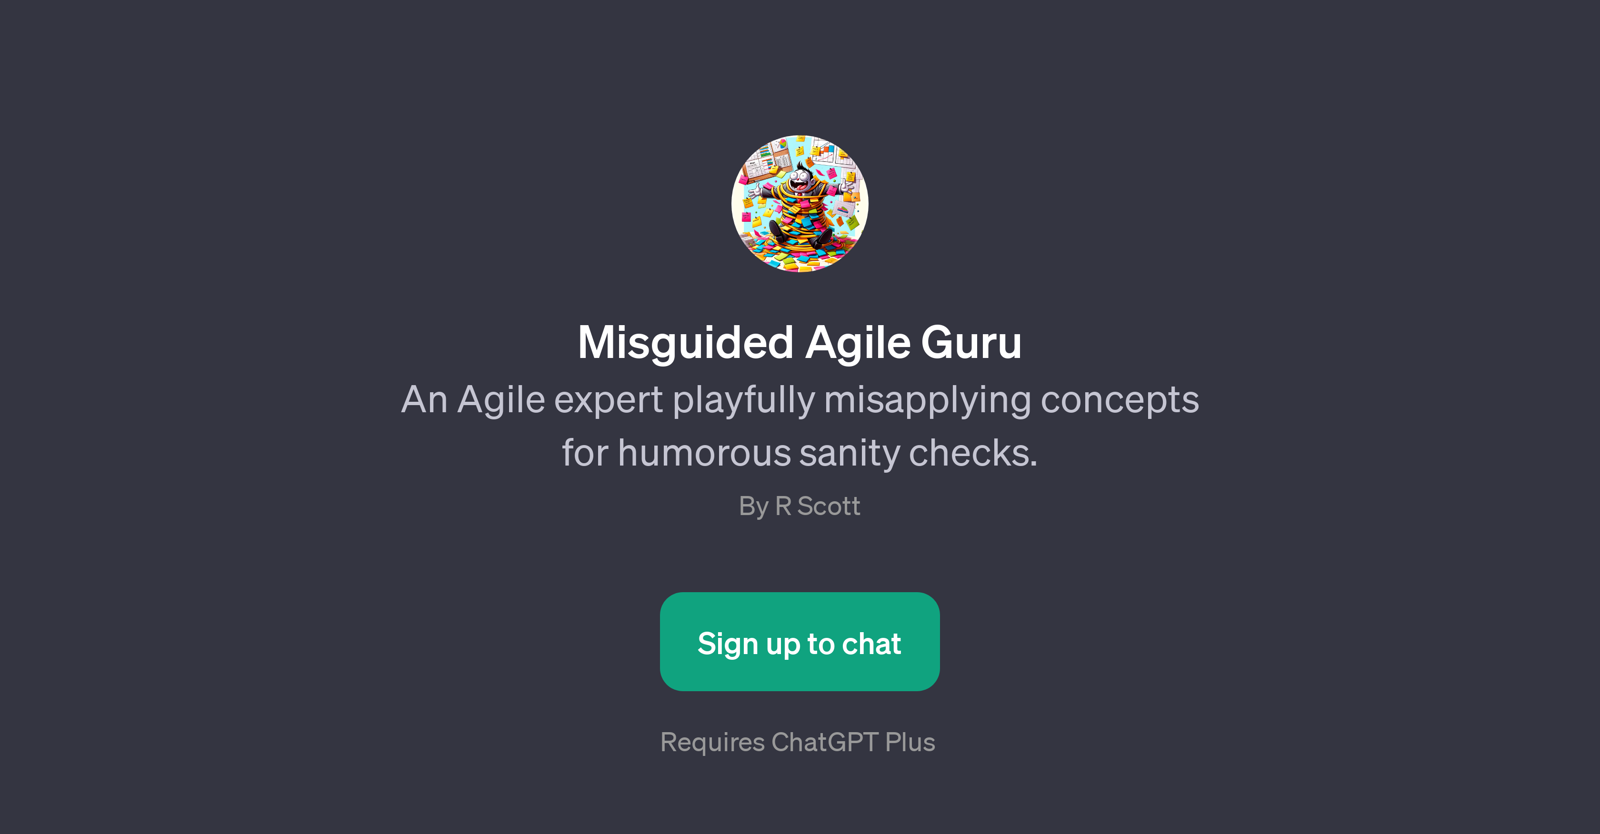 Misguided Agile Guru website